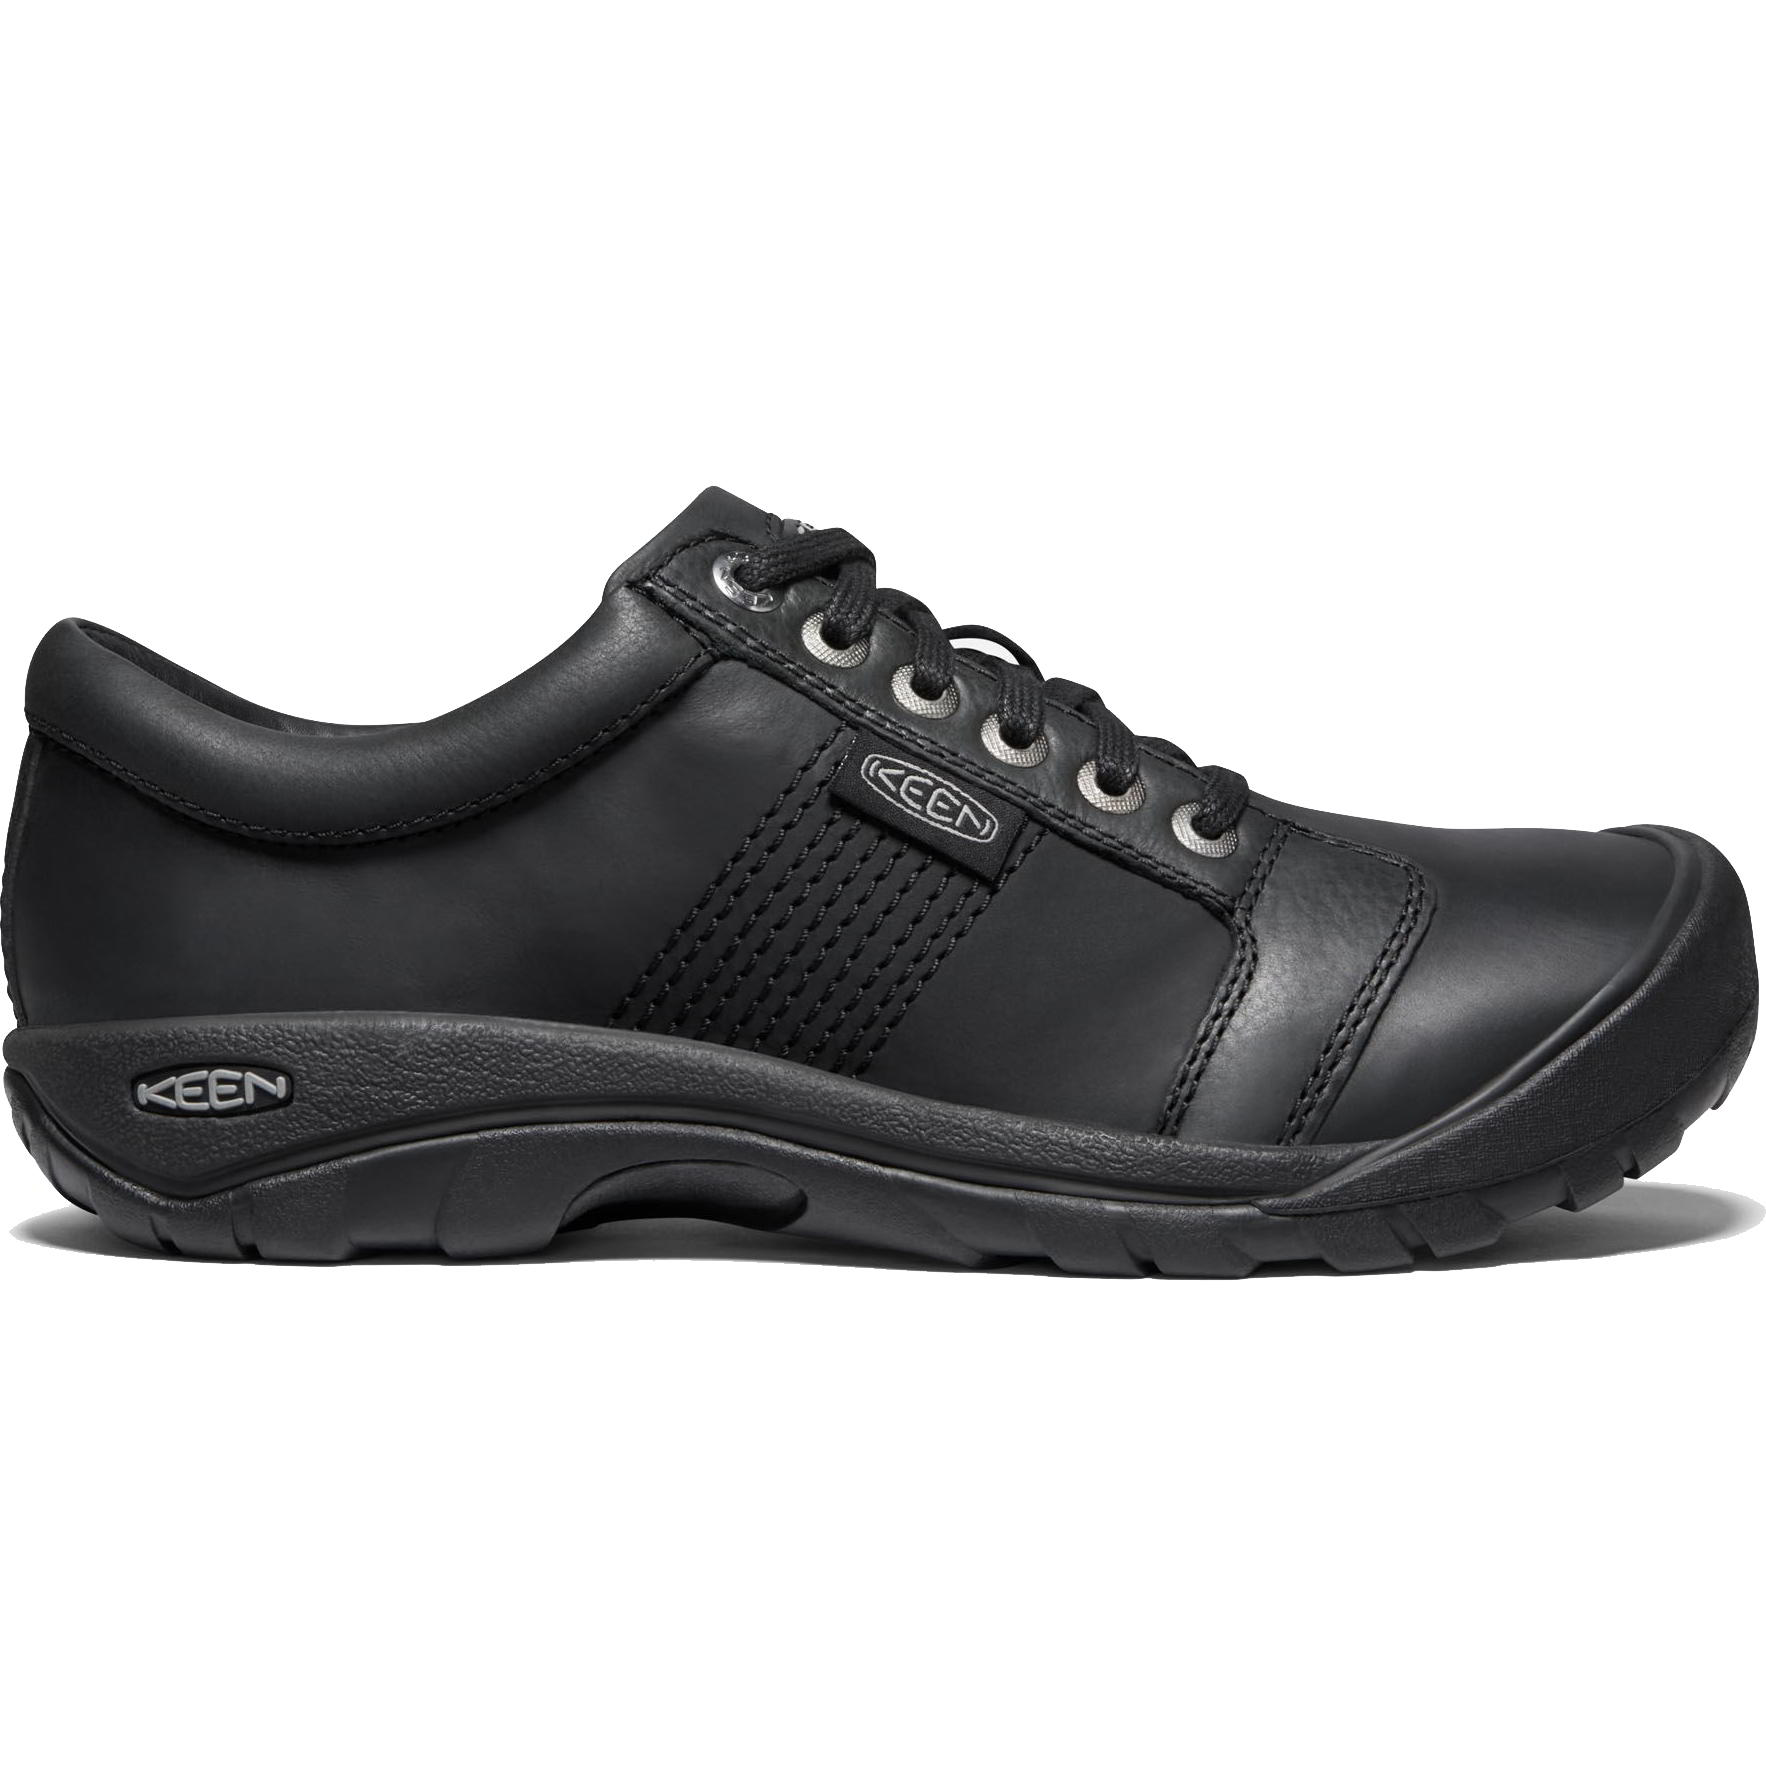 Keen Men's Austin Casual Walking Hiking Shoes - UK 8